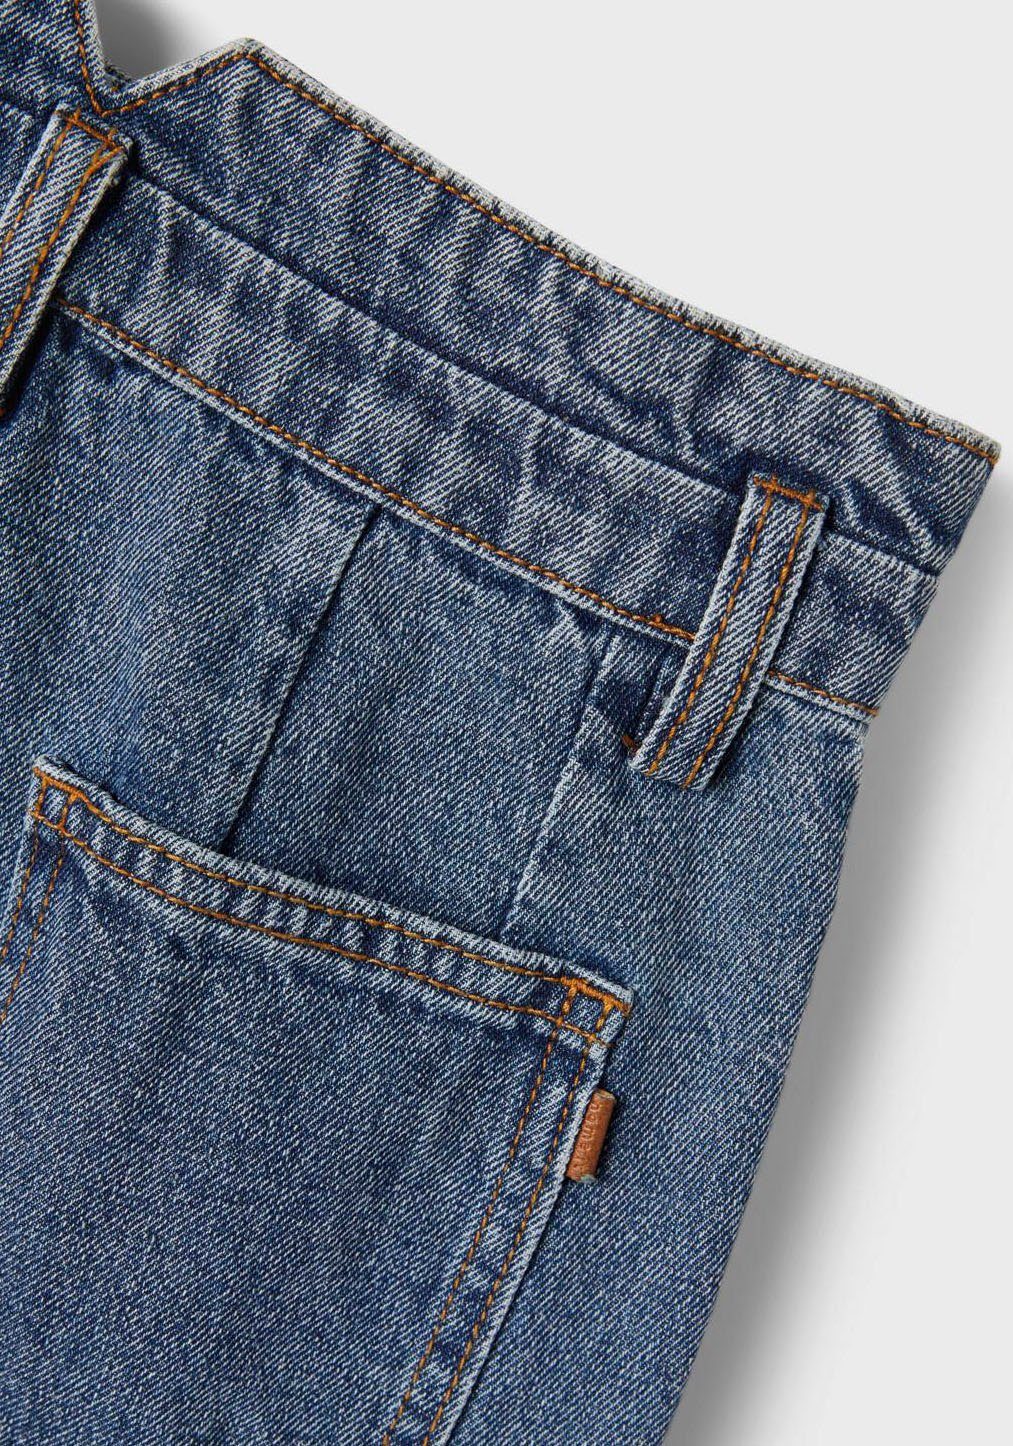 NKFBELLA MOM High-waist-Jeans AN medium JEANS 1092-DO It denim Name HW blue NOOS